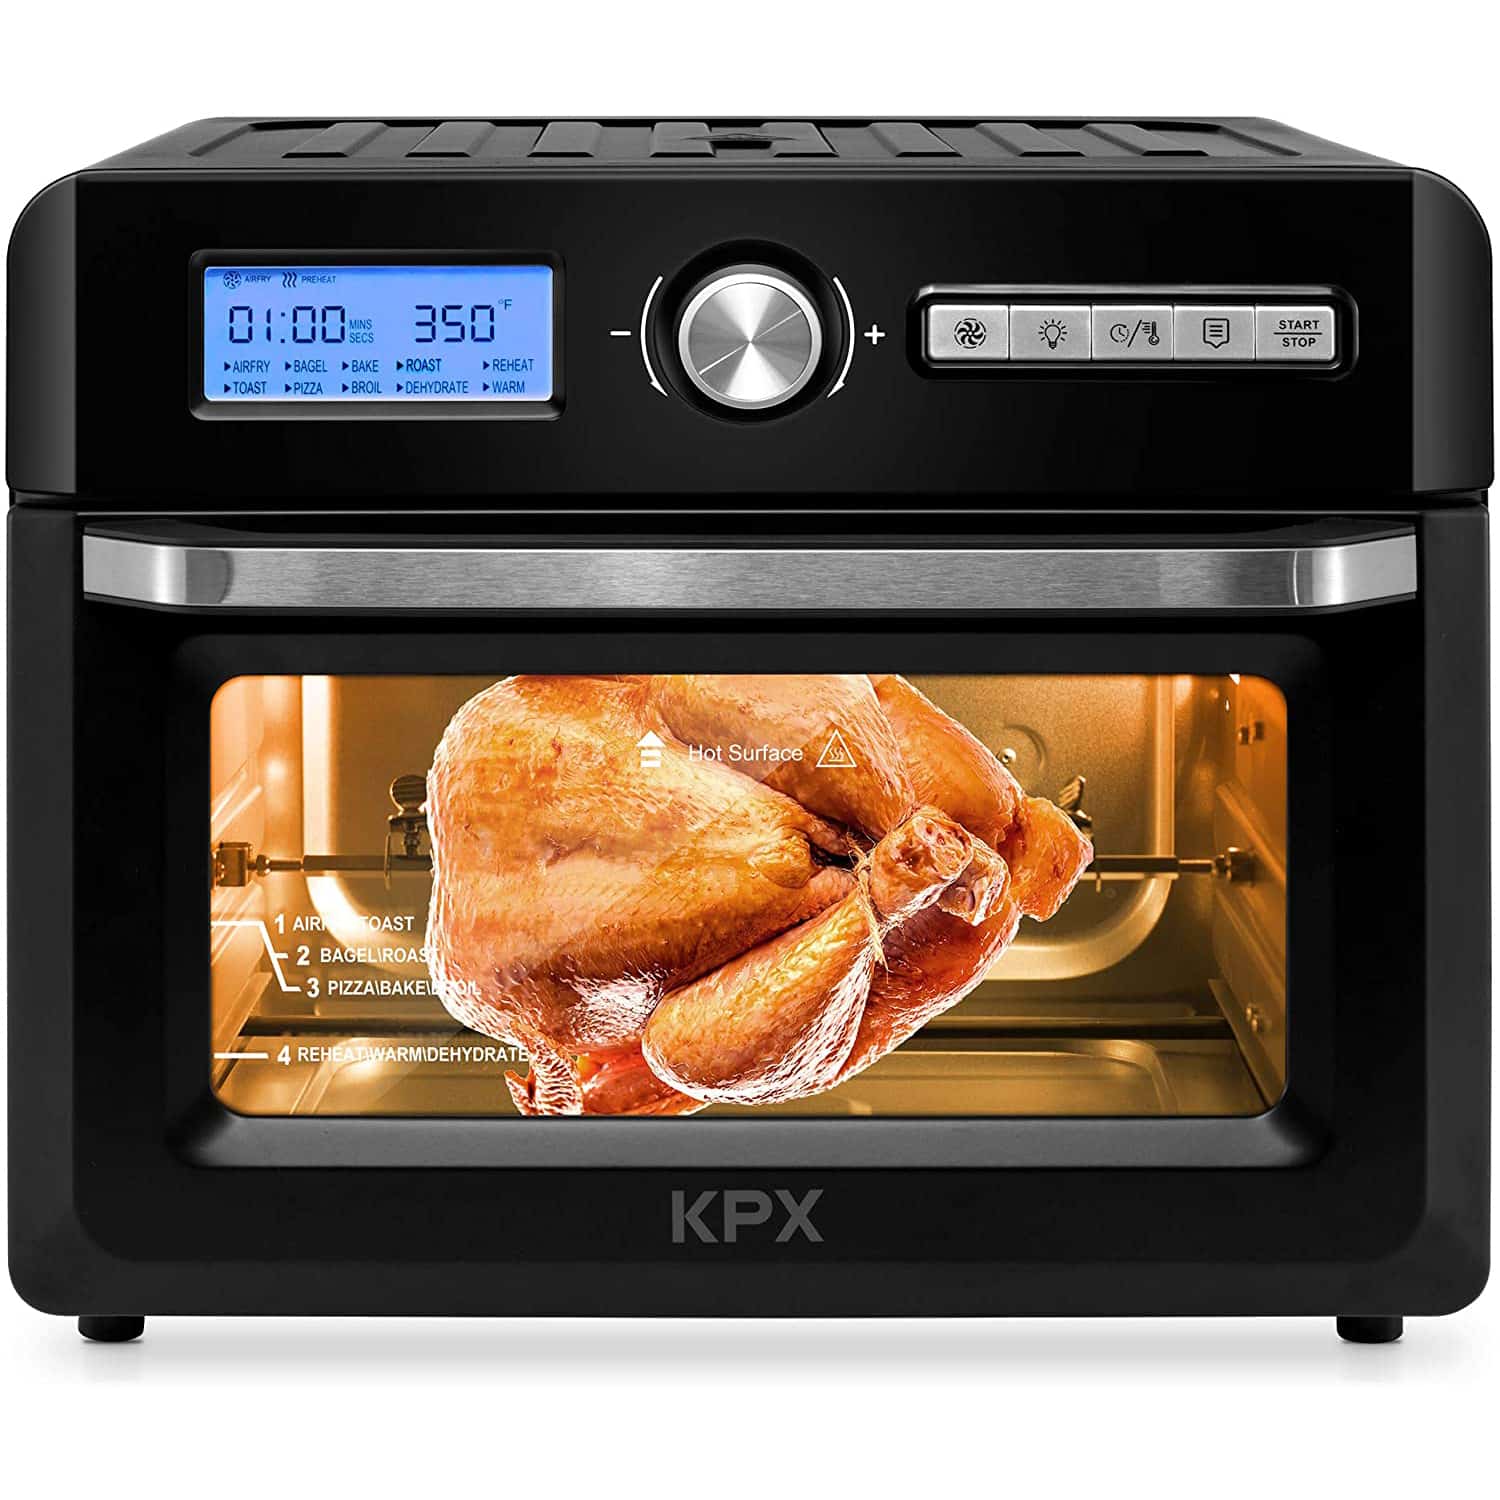 3. KPX 10 In 1 20 Quart Power Air Fryer Oven 